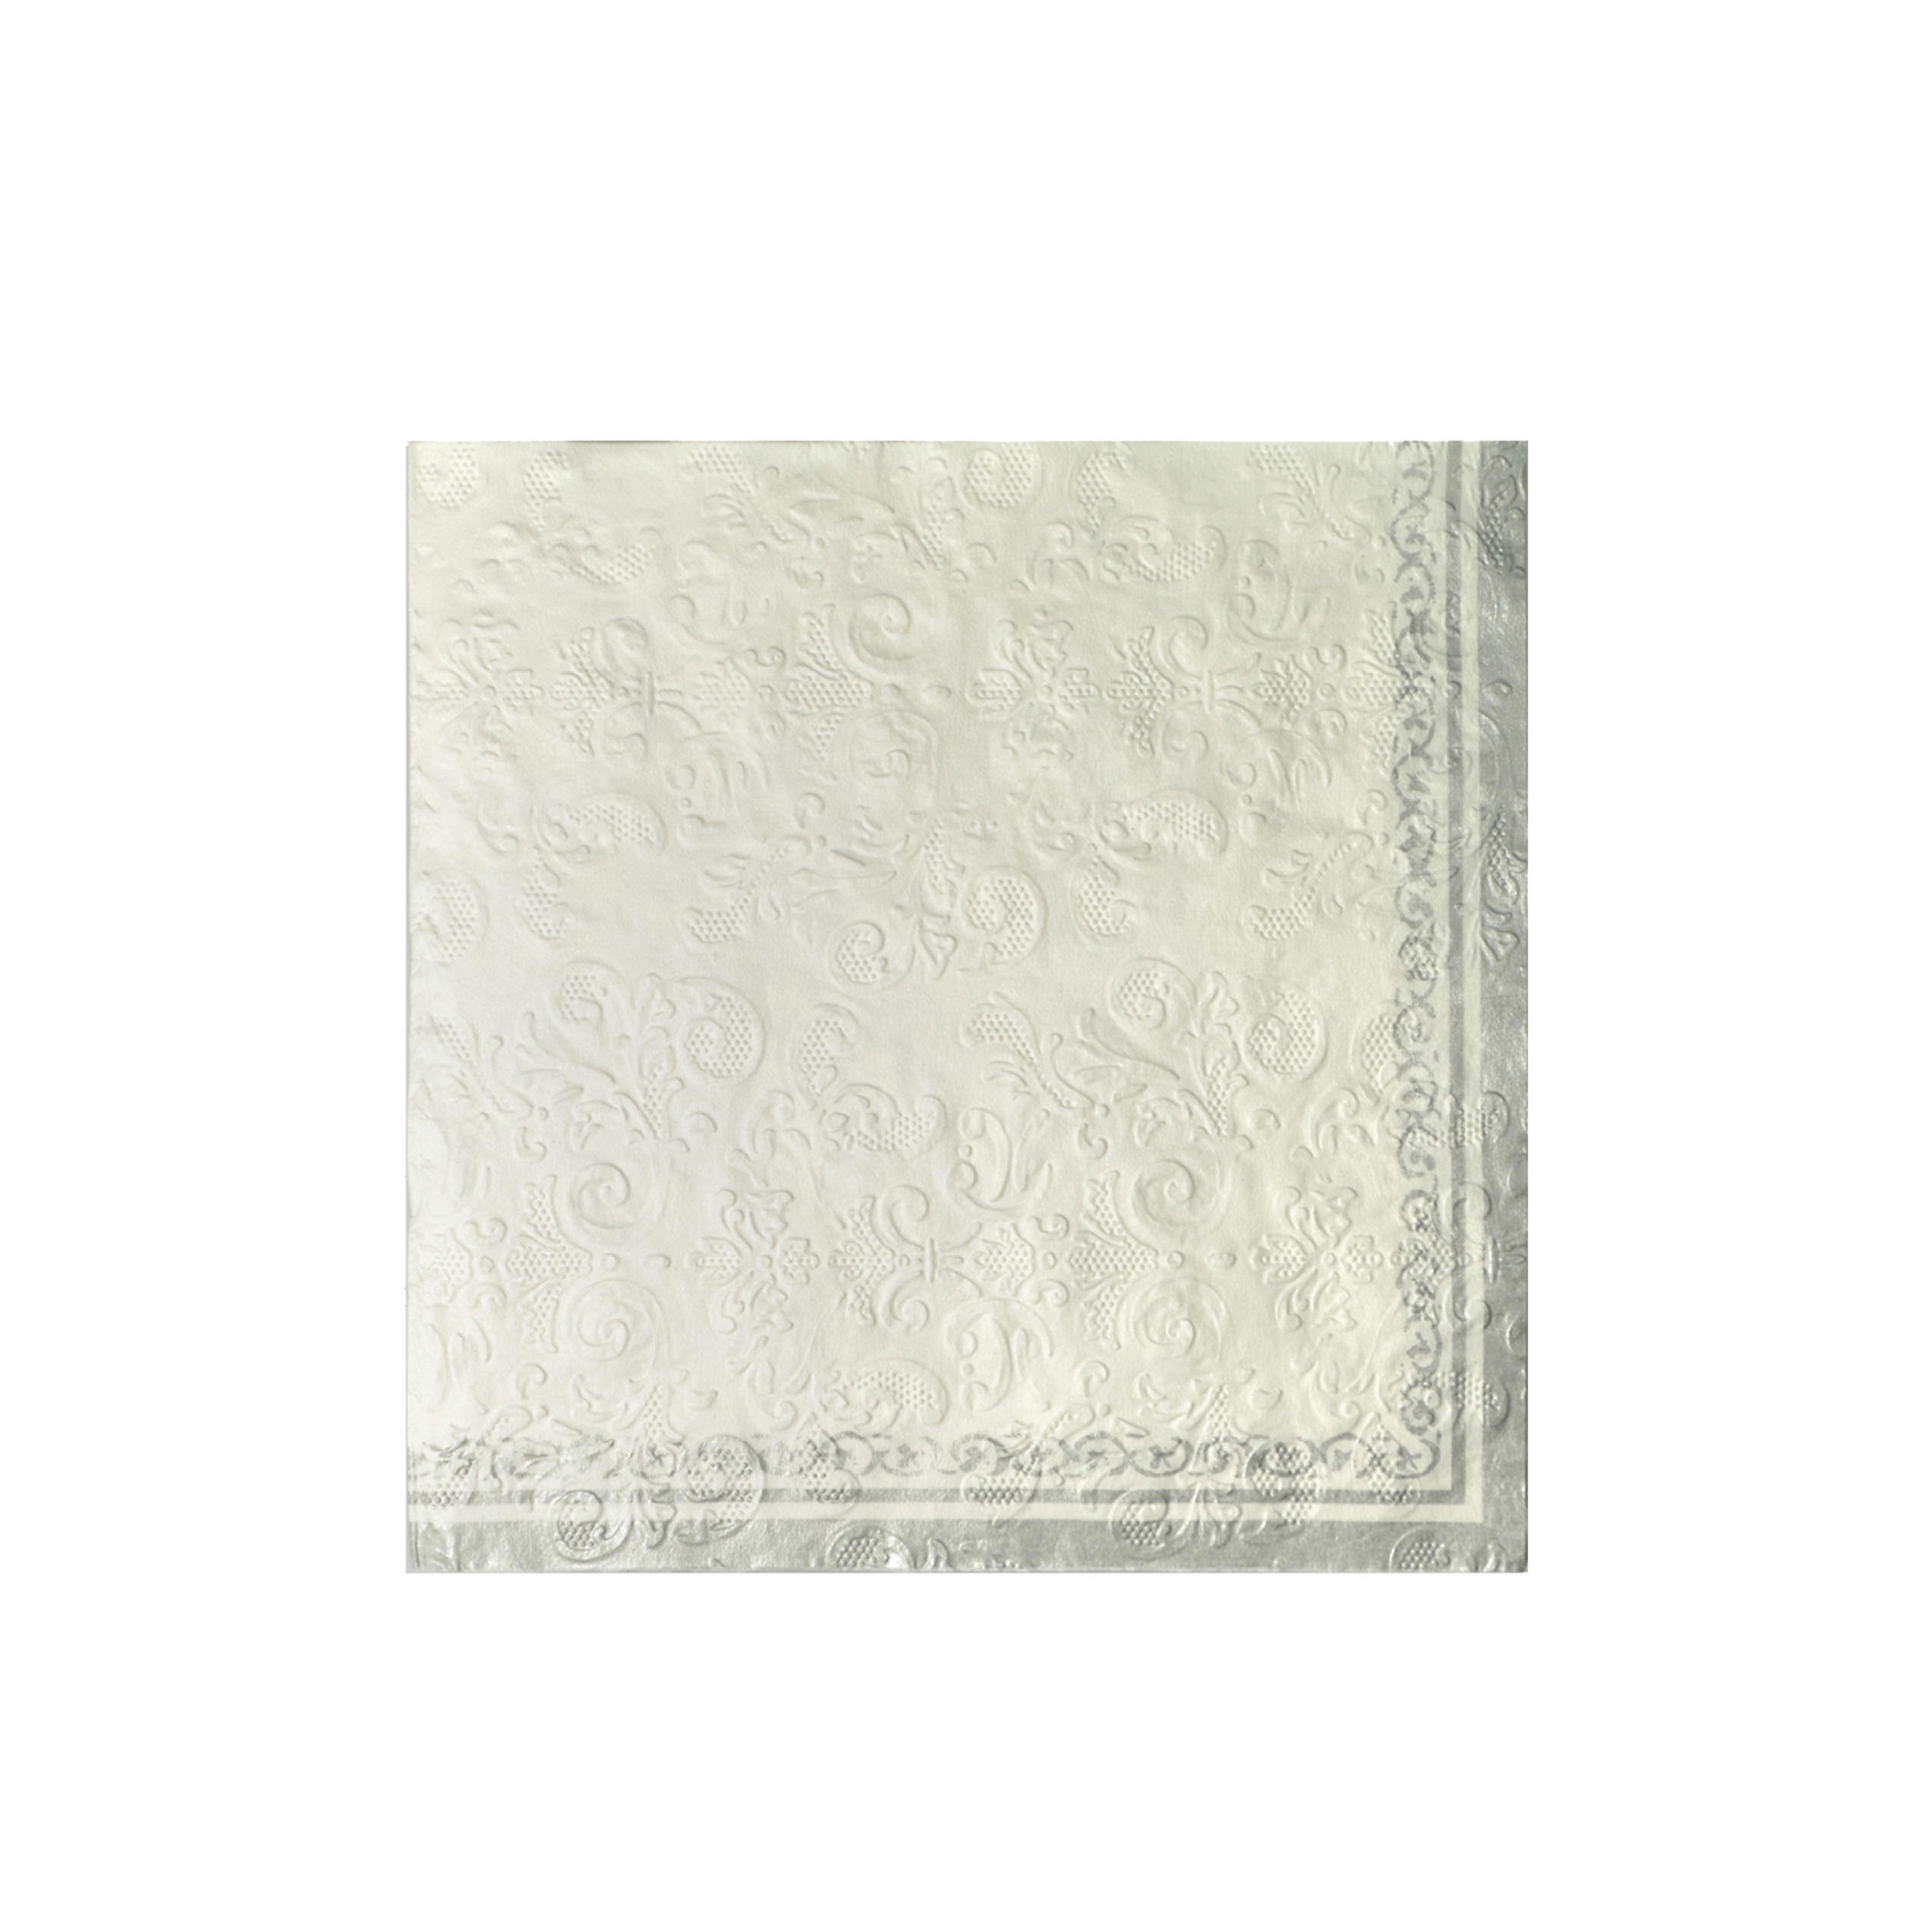 Casa Regalo 3ply Embossed Napkin 20pk White/Silver Image 1